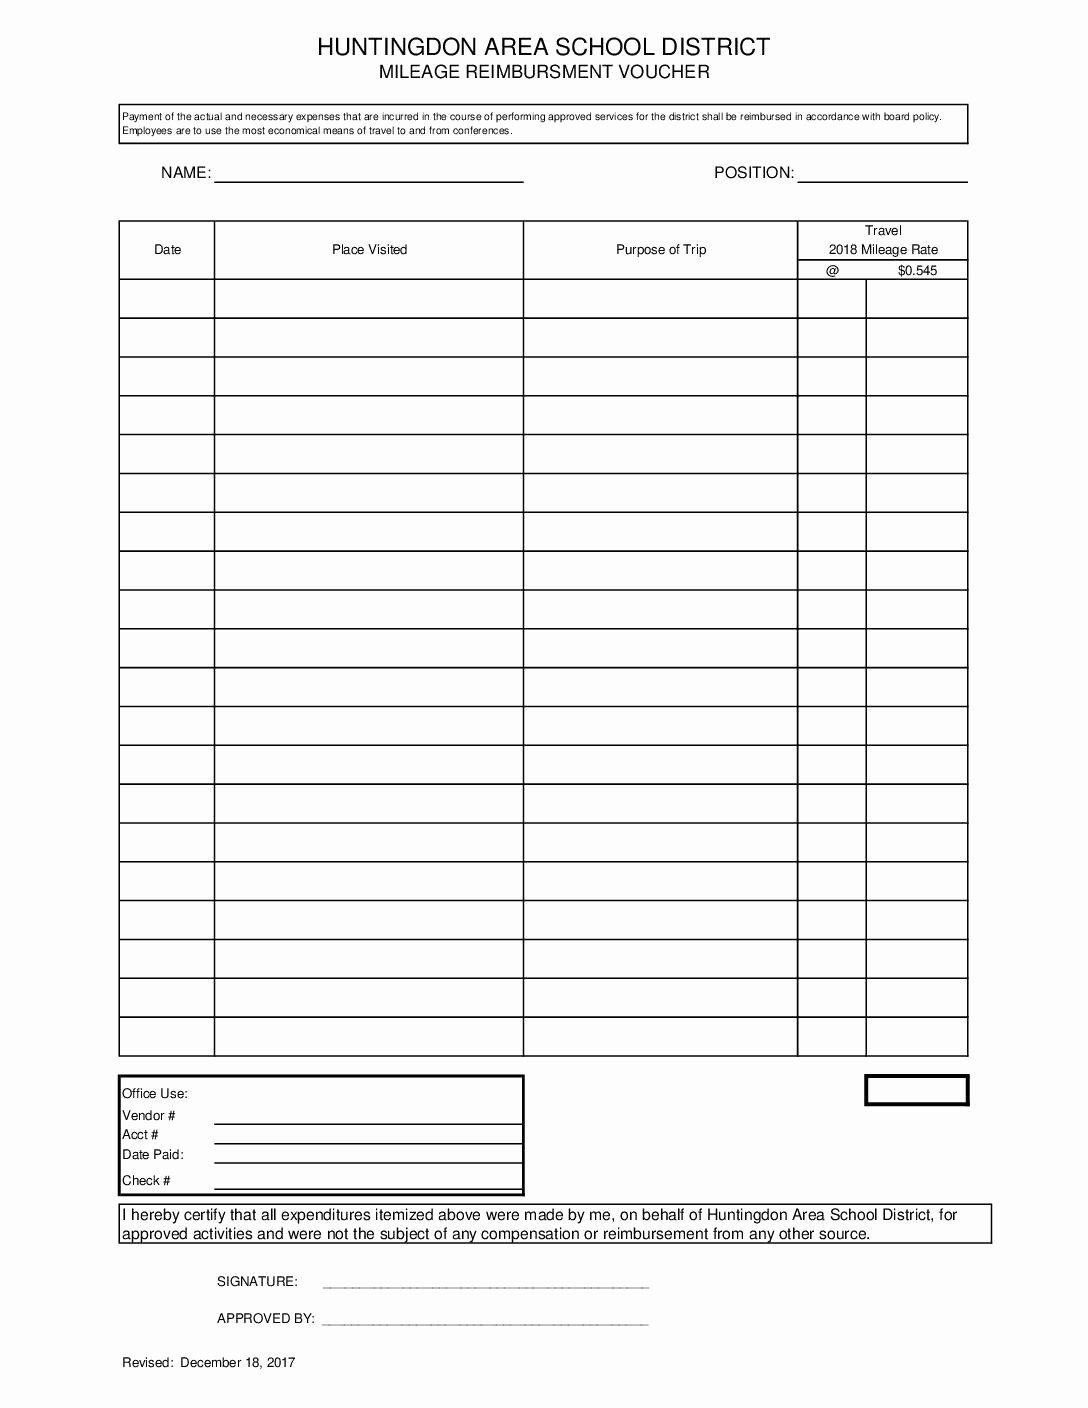 Mileage Reimbursement form Pdf Awesome Mileage Ly Reimbursement form 2018 – Huntingdon area School District